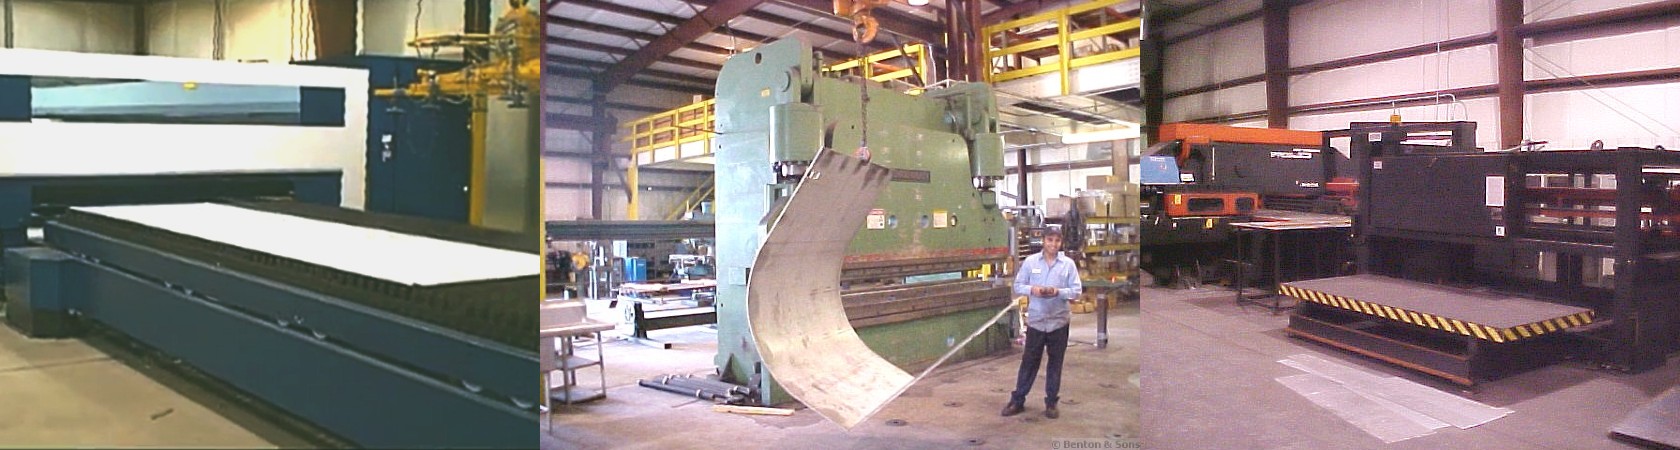 Fabrication Equipment at Benton & Sons Fabrication